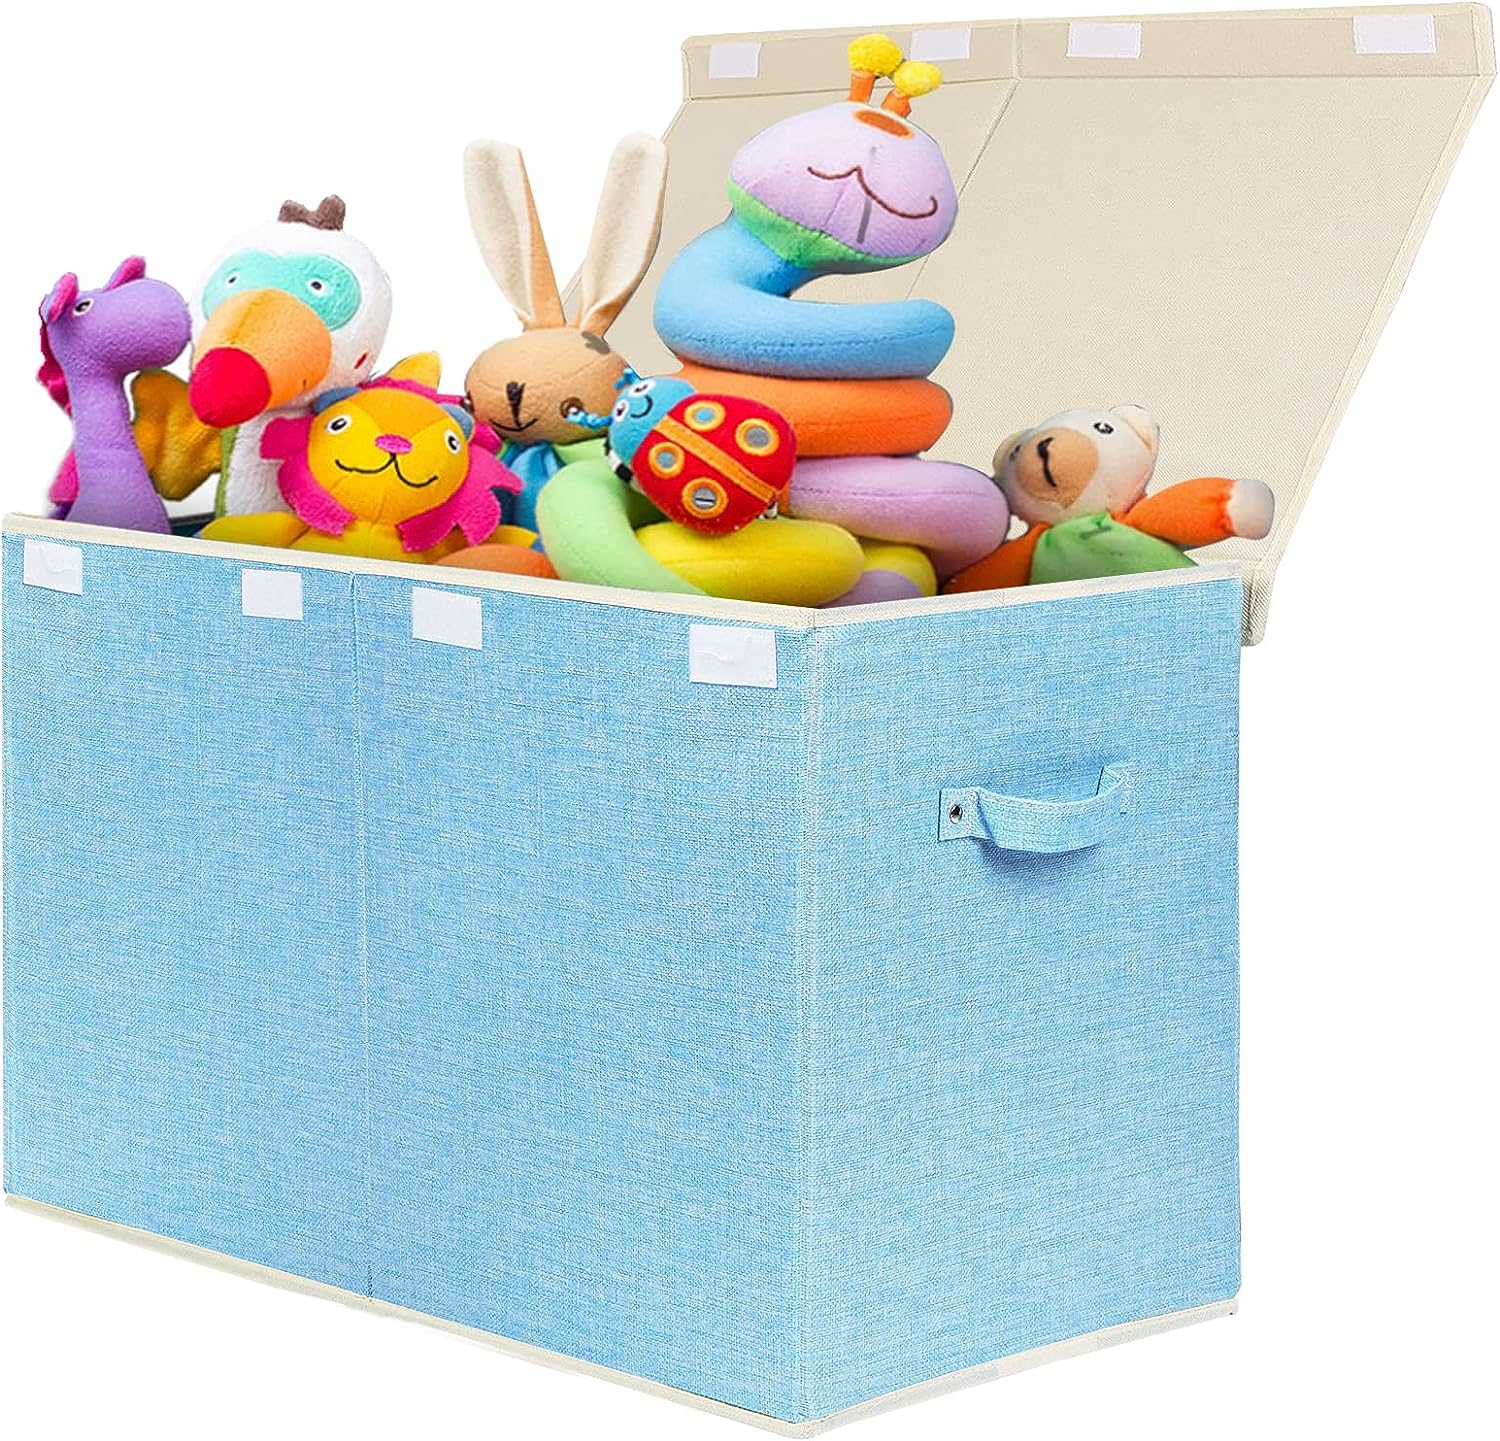 Blushbees® Large Toy Box Chest Storage - Linen Beige